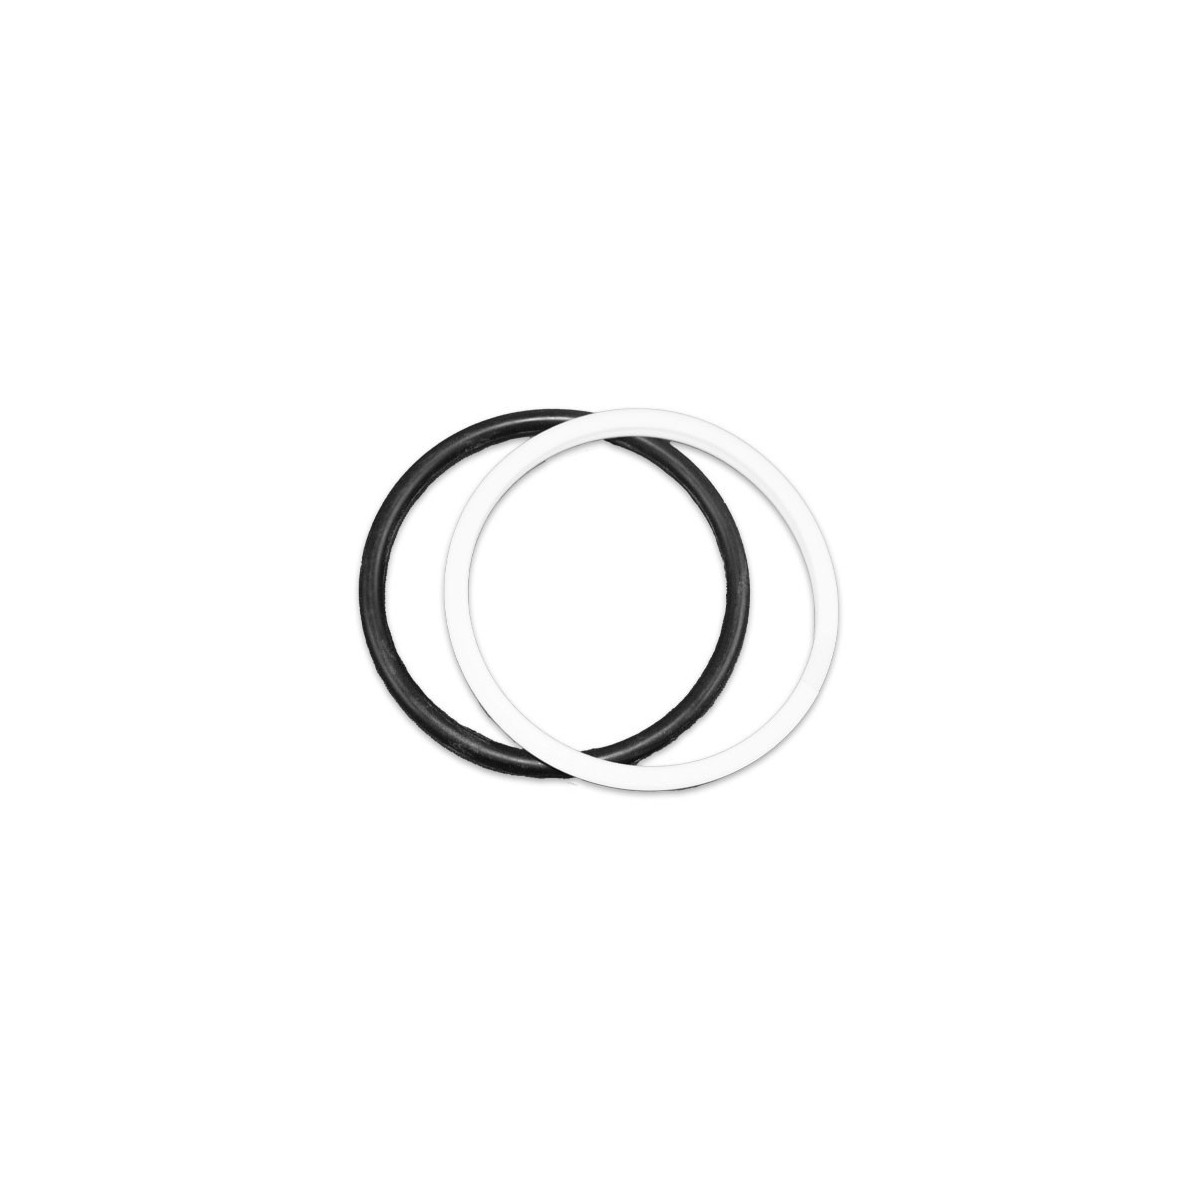 O-ring and stop ring Kubota 80-77 mm L2202